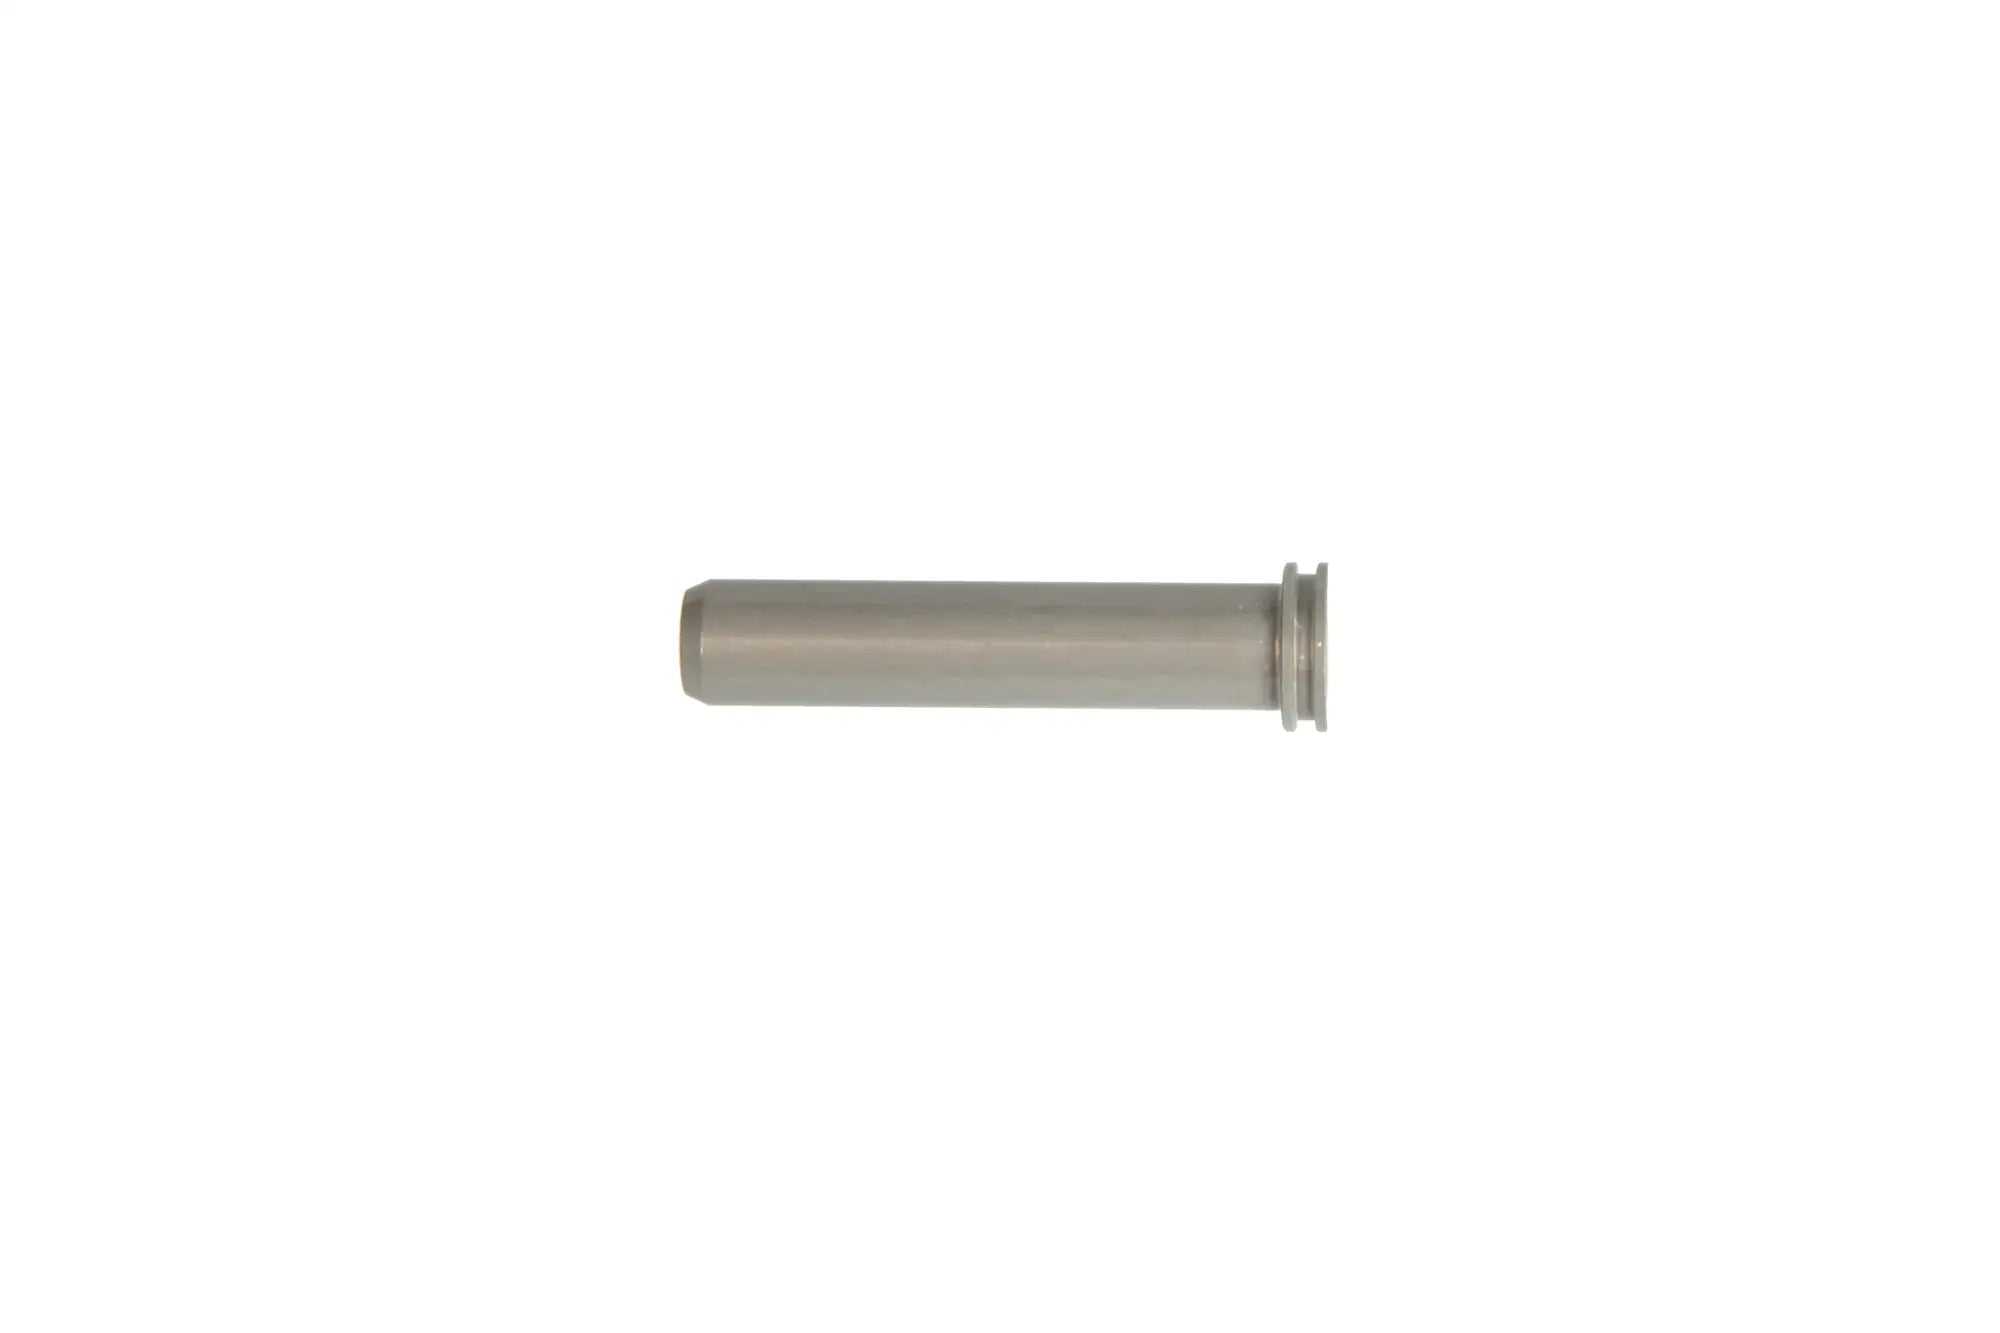 Standard nozzle for CZ Bren AEG replicas (34,1 mm.)-1